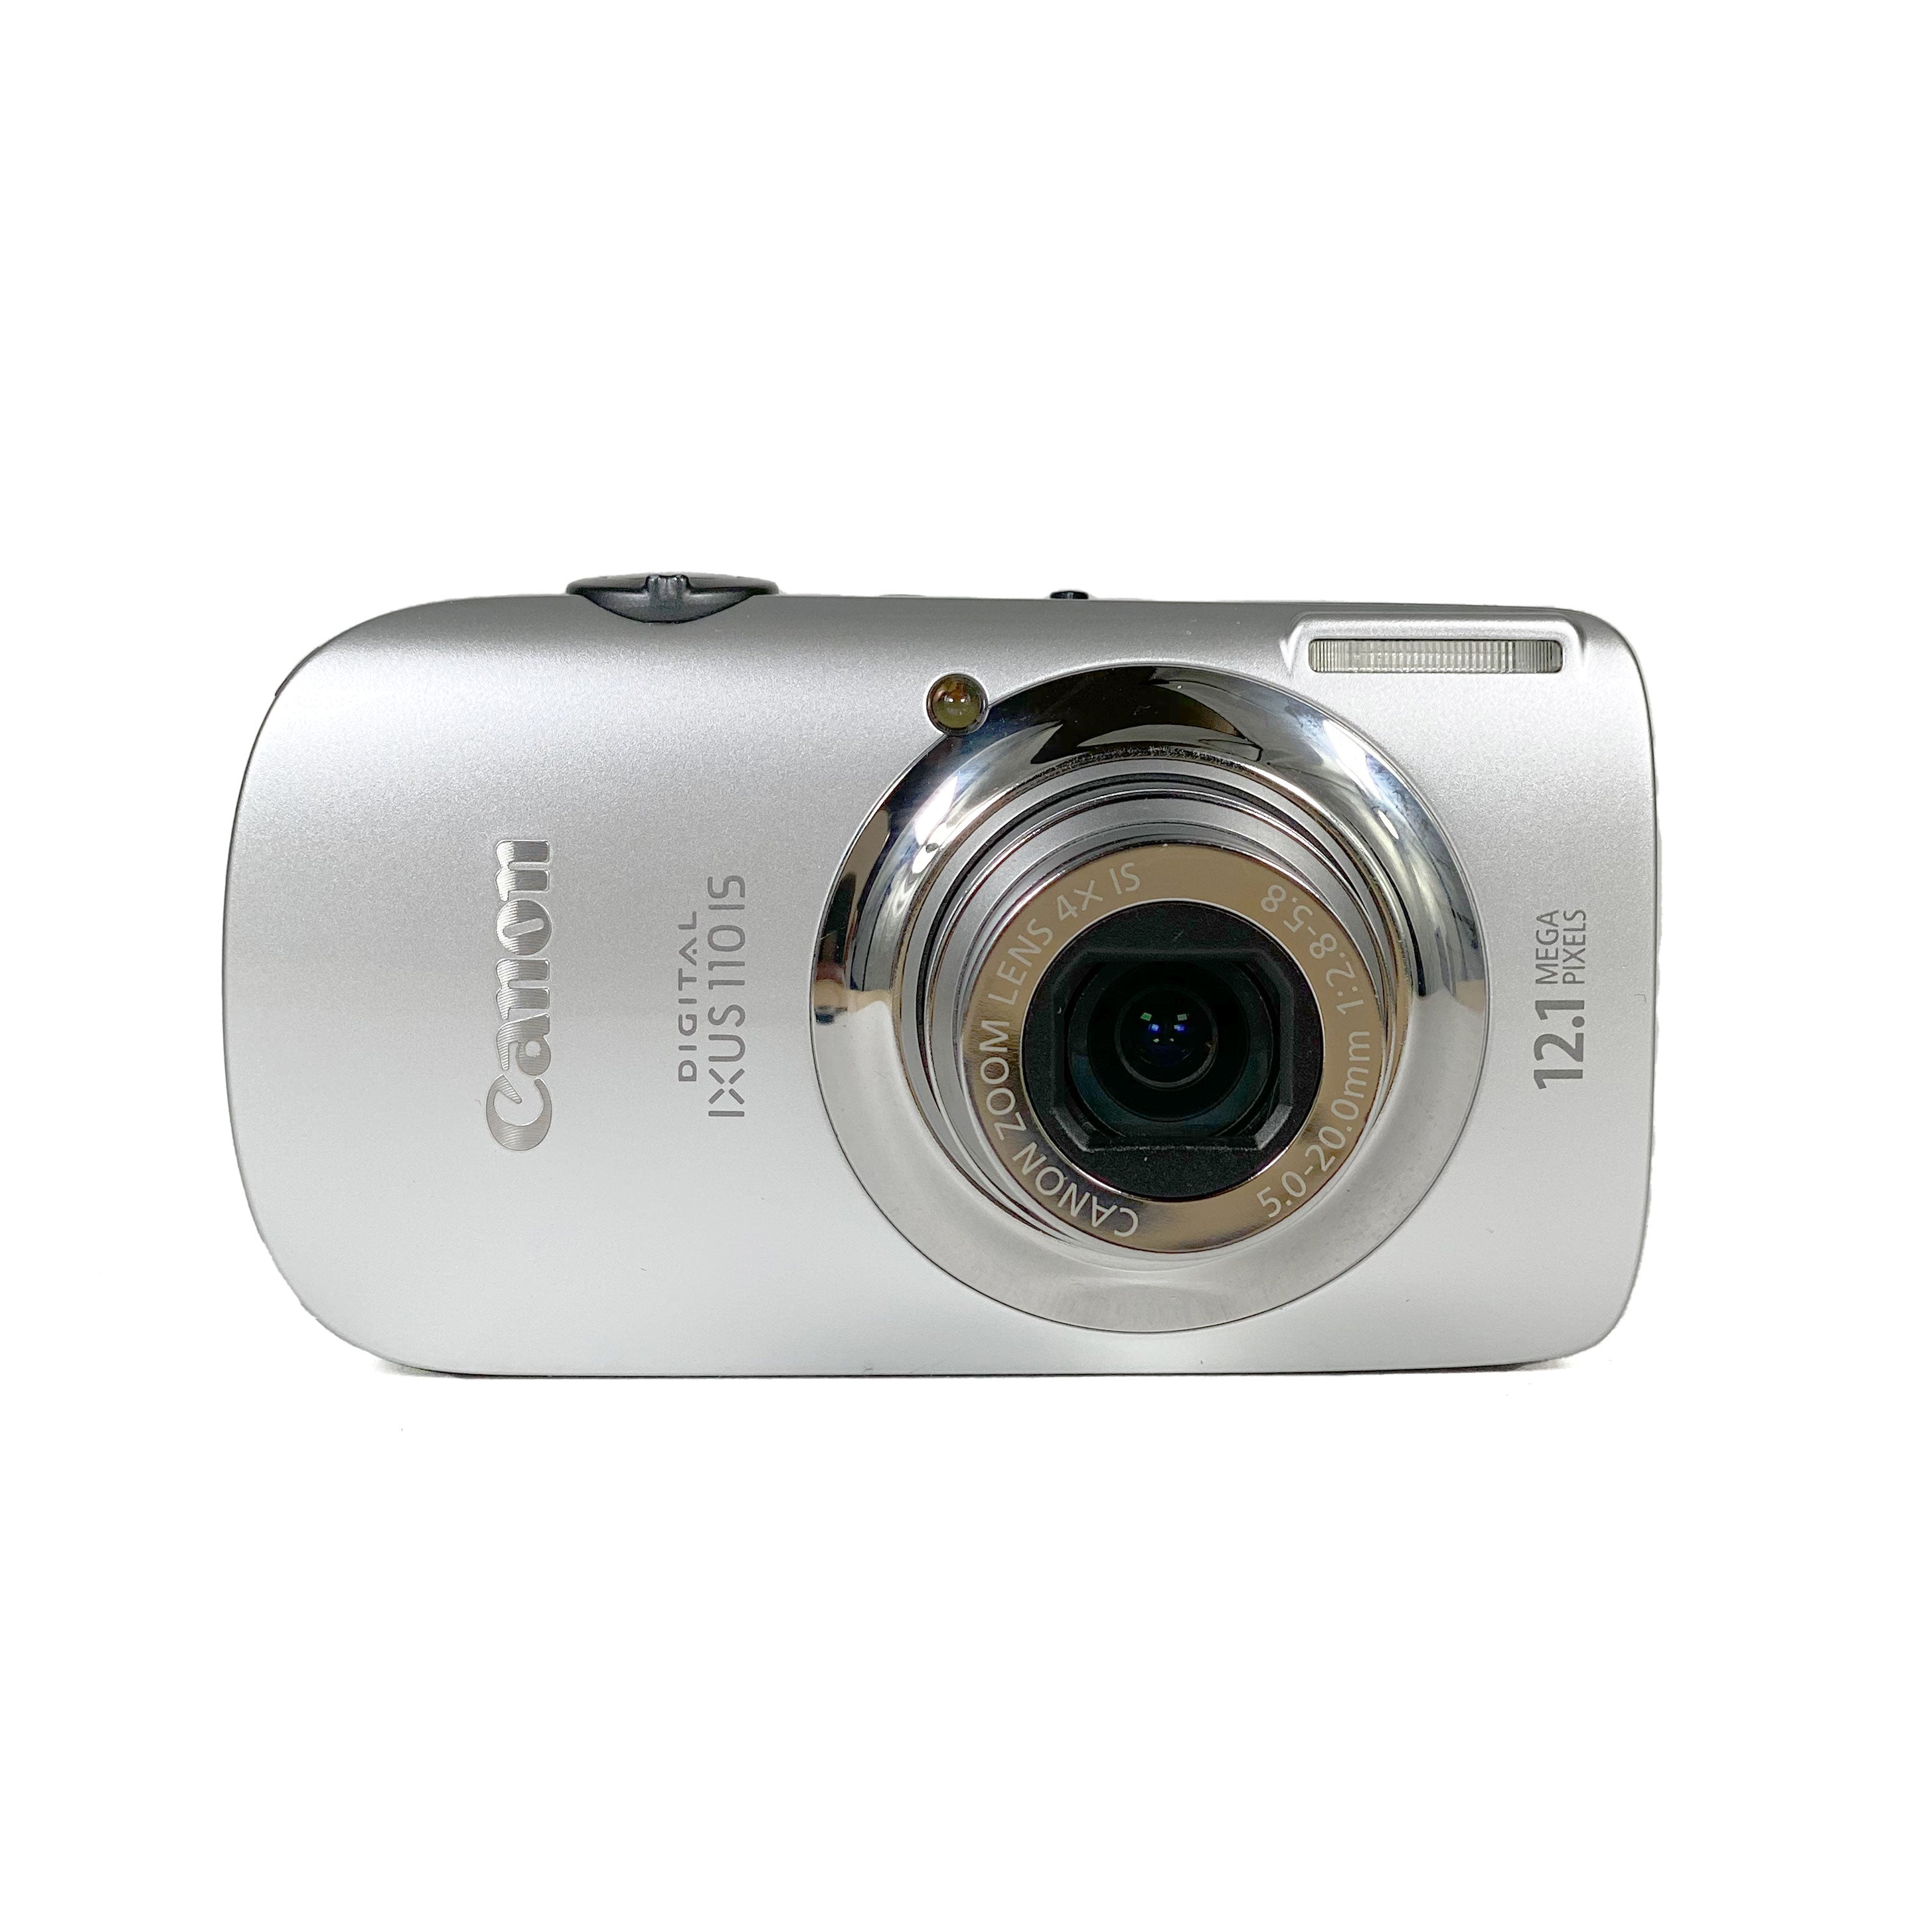 Canon IXUS 110 IS Digital Compact